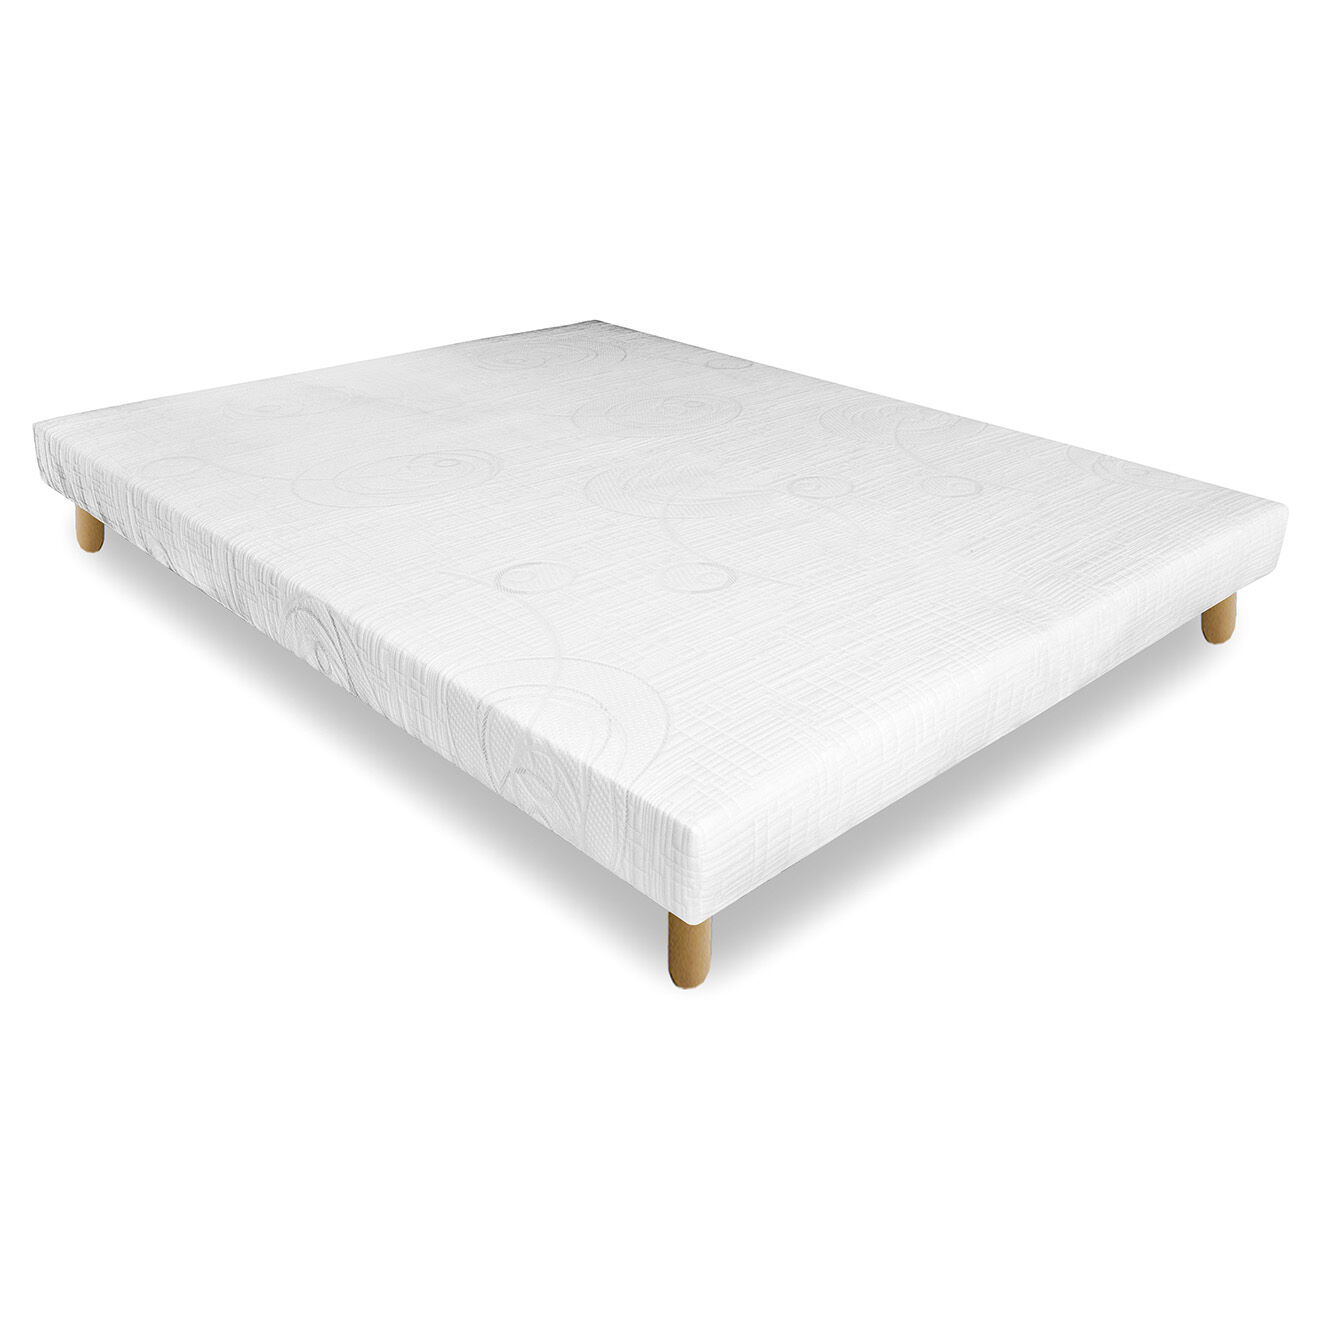 Sommier Confortel blanc - 140x190 cm